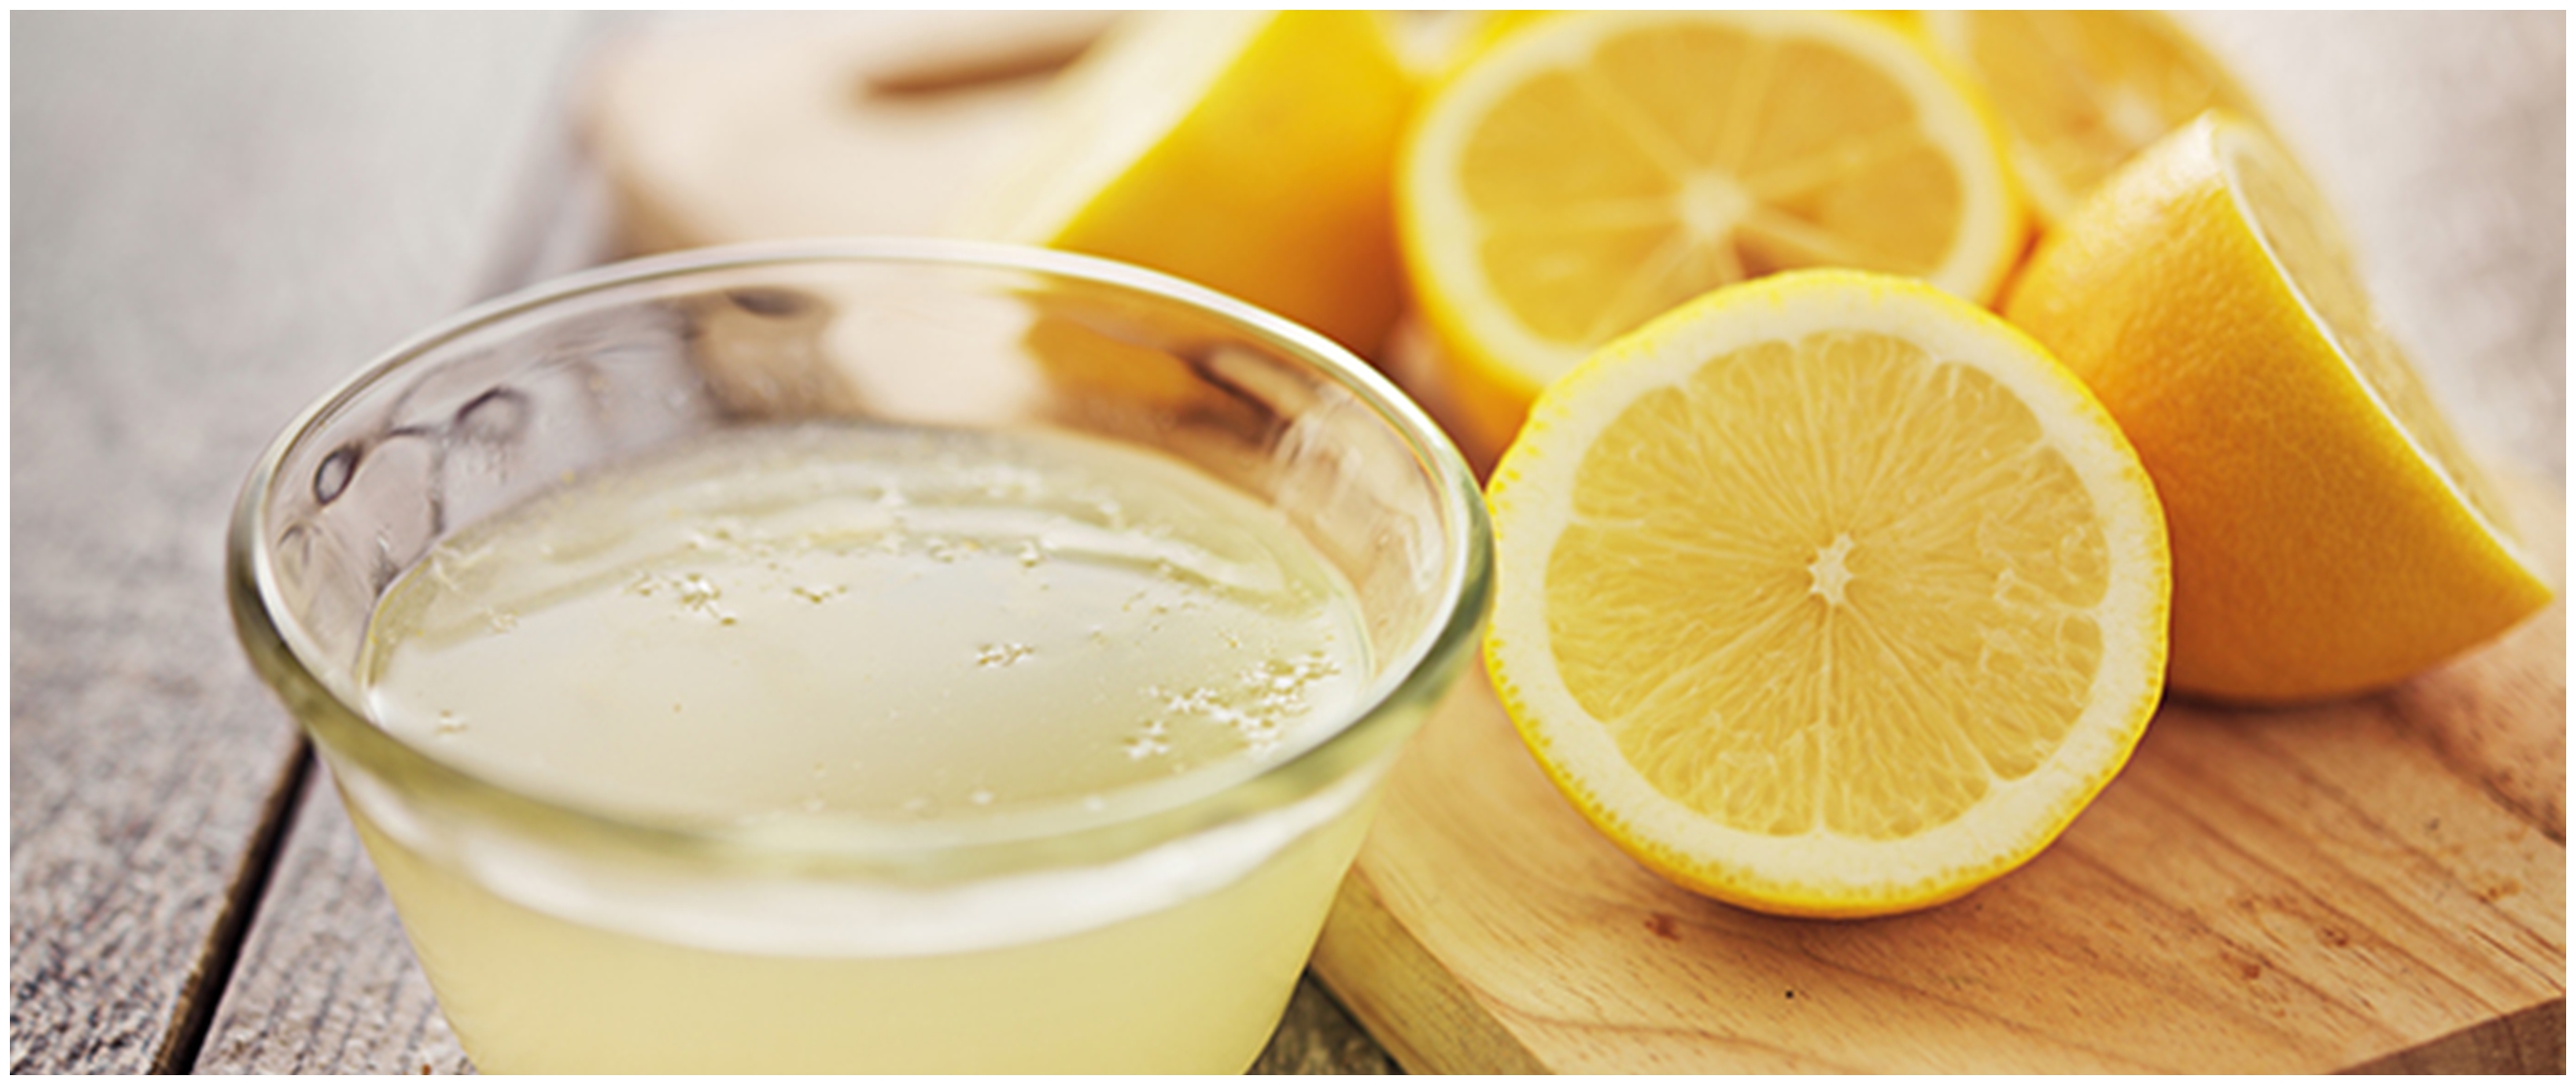 4 Cara mengecilkan perut dengan lemon, manjur & tanpa ribet